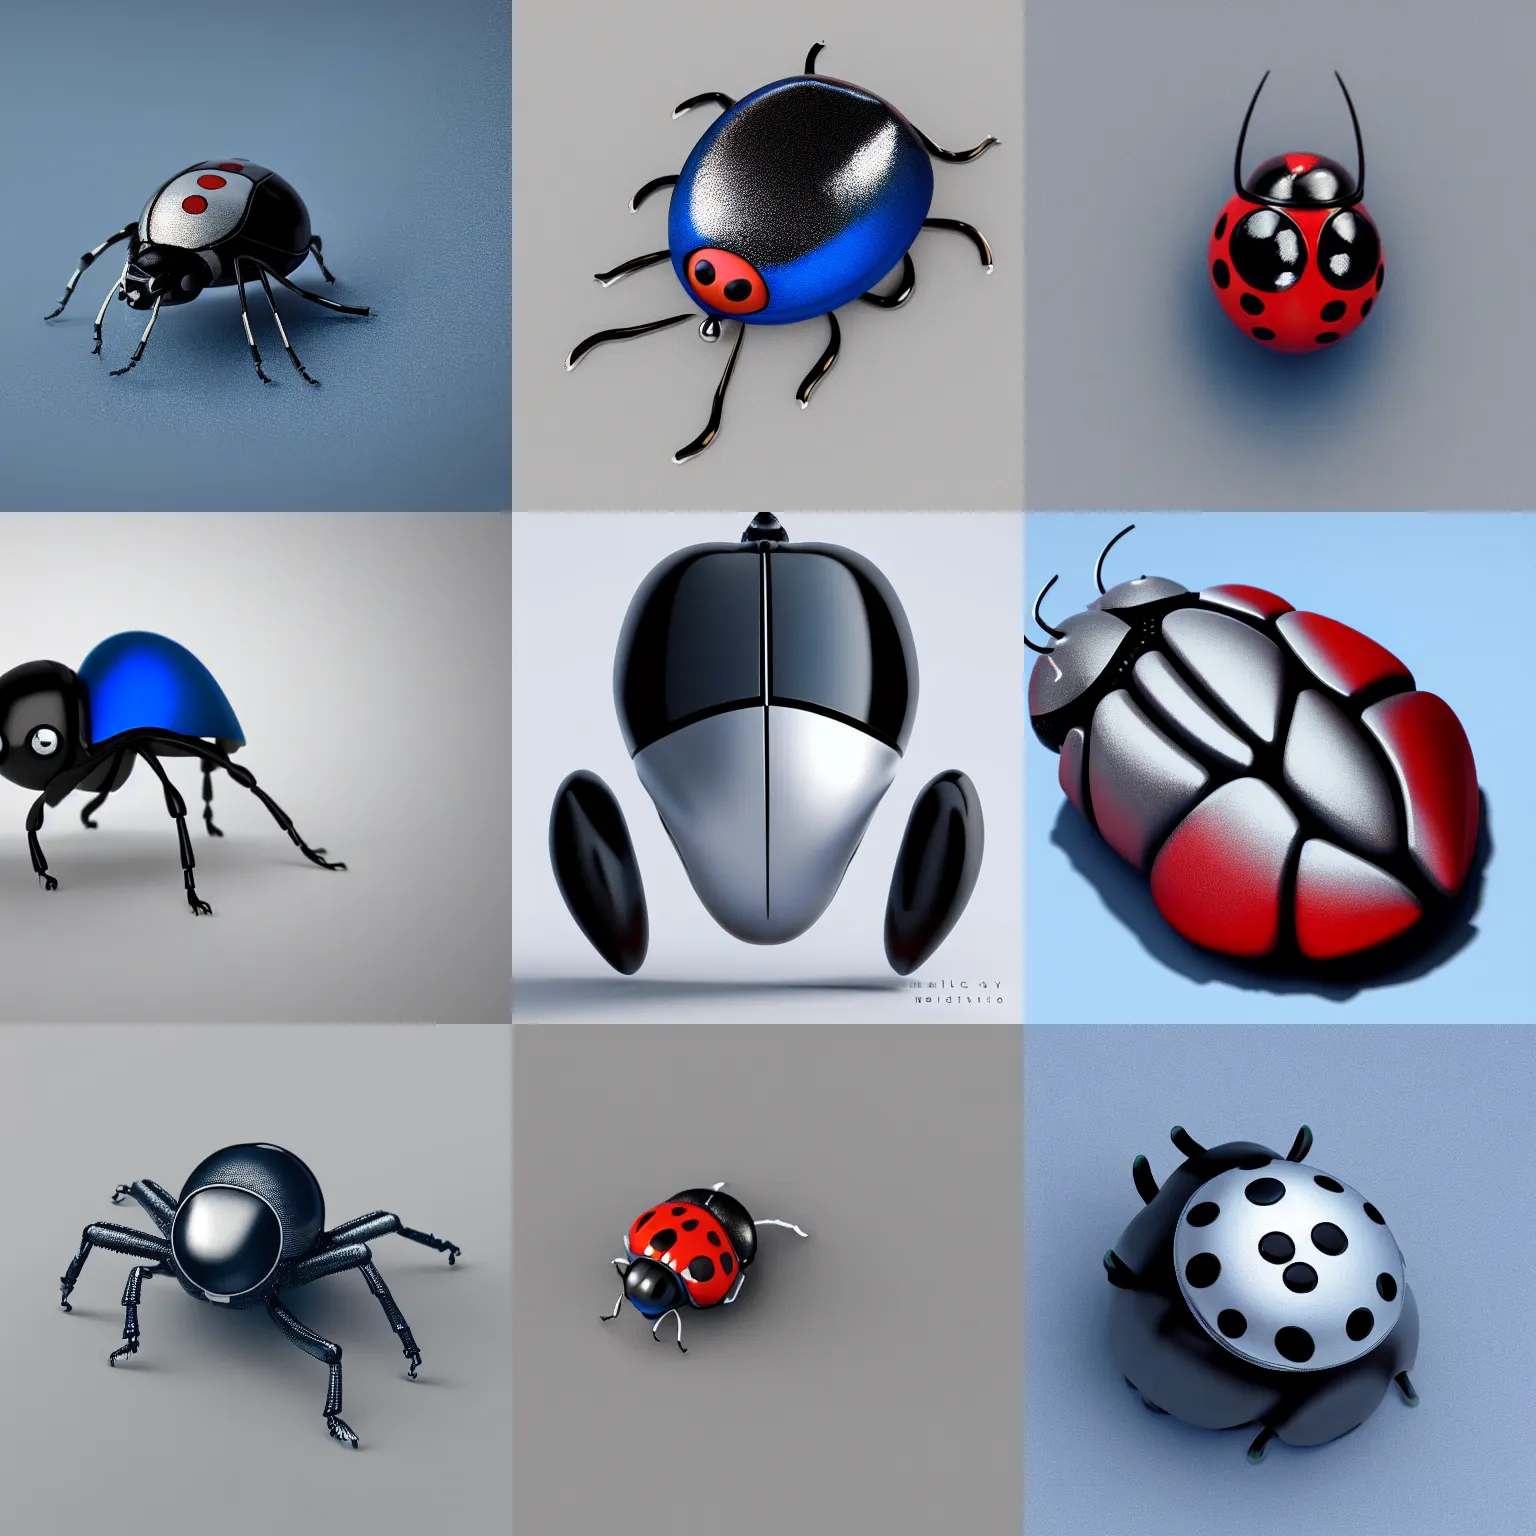 Contact — Ladybug Design Studios